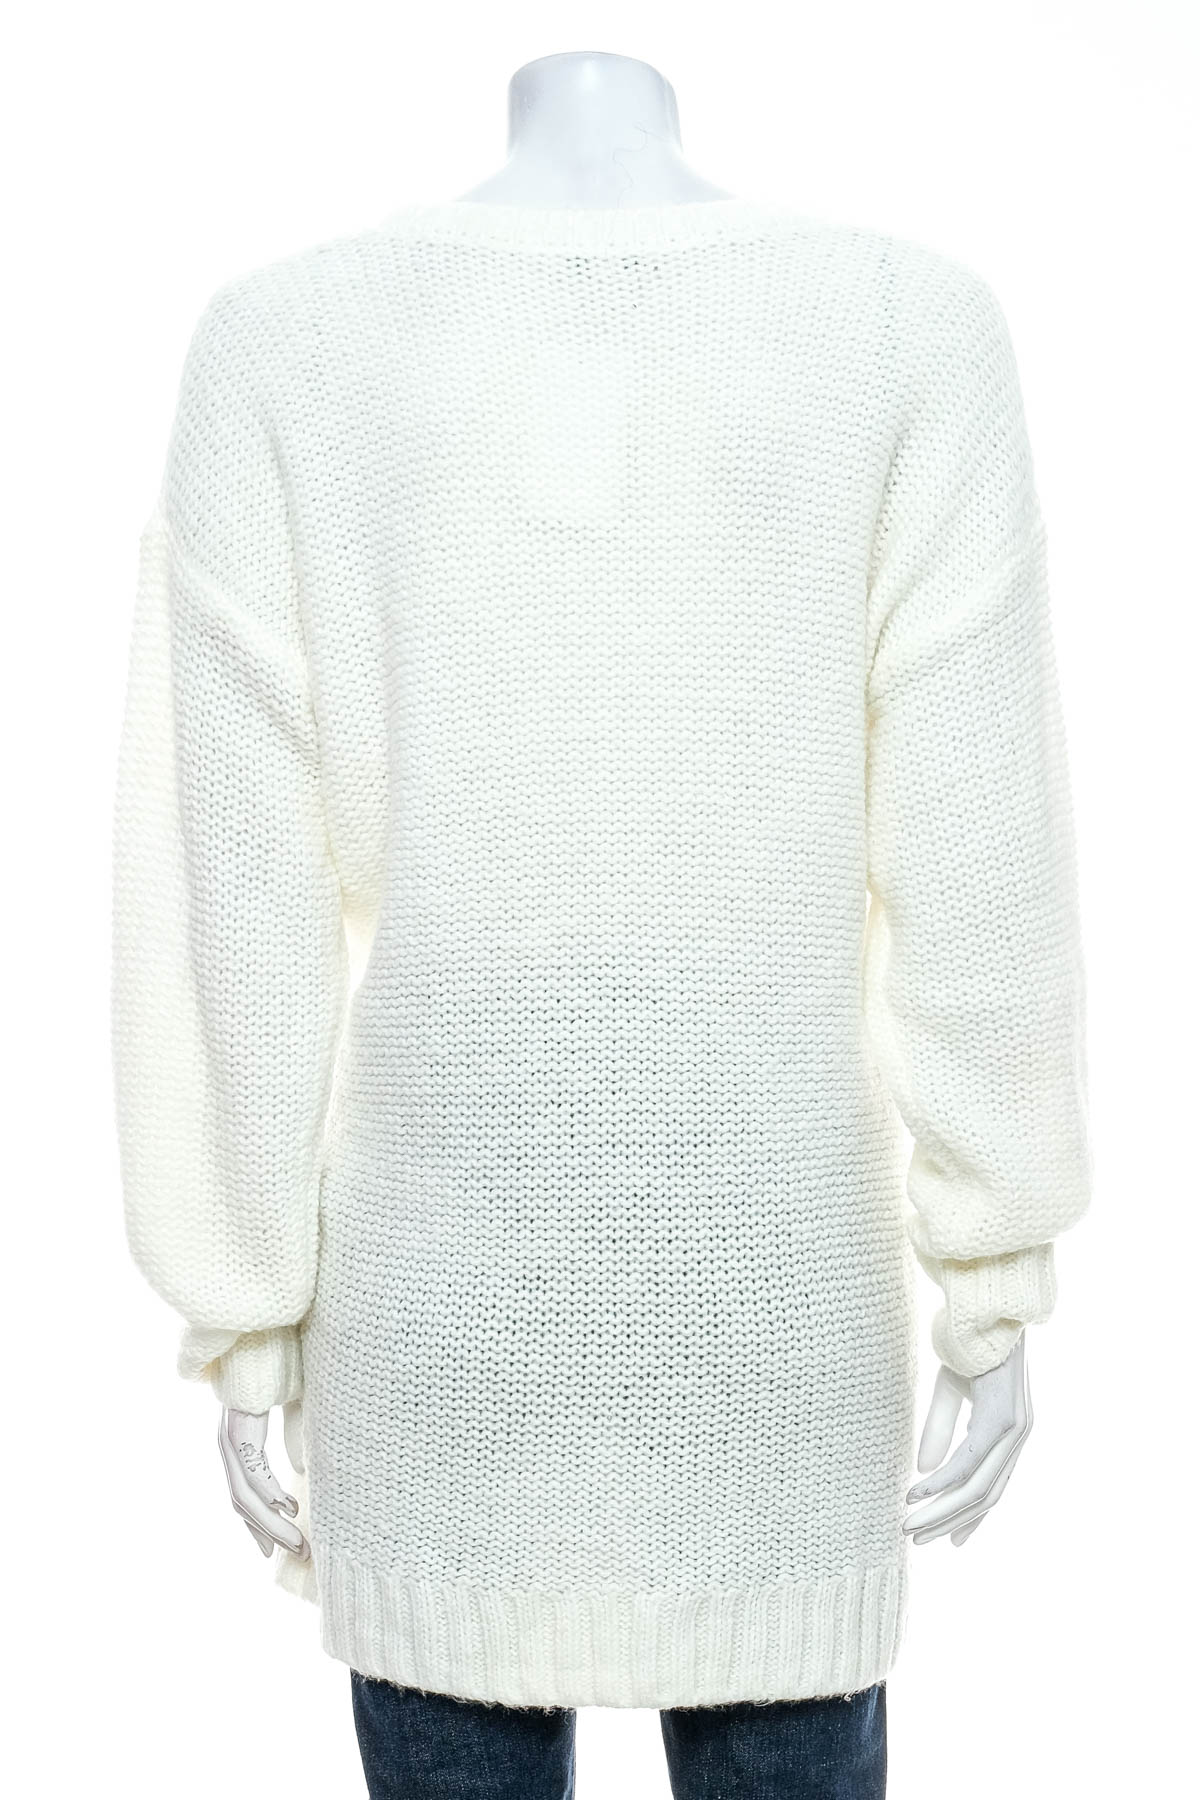 Women's sweater - EDC - 1